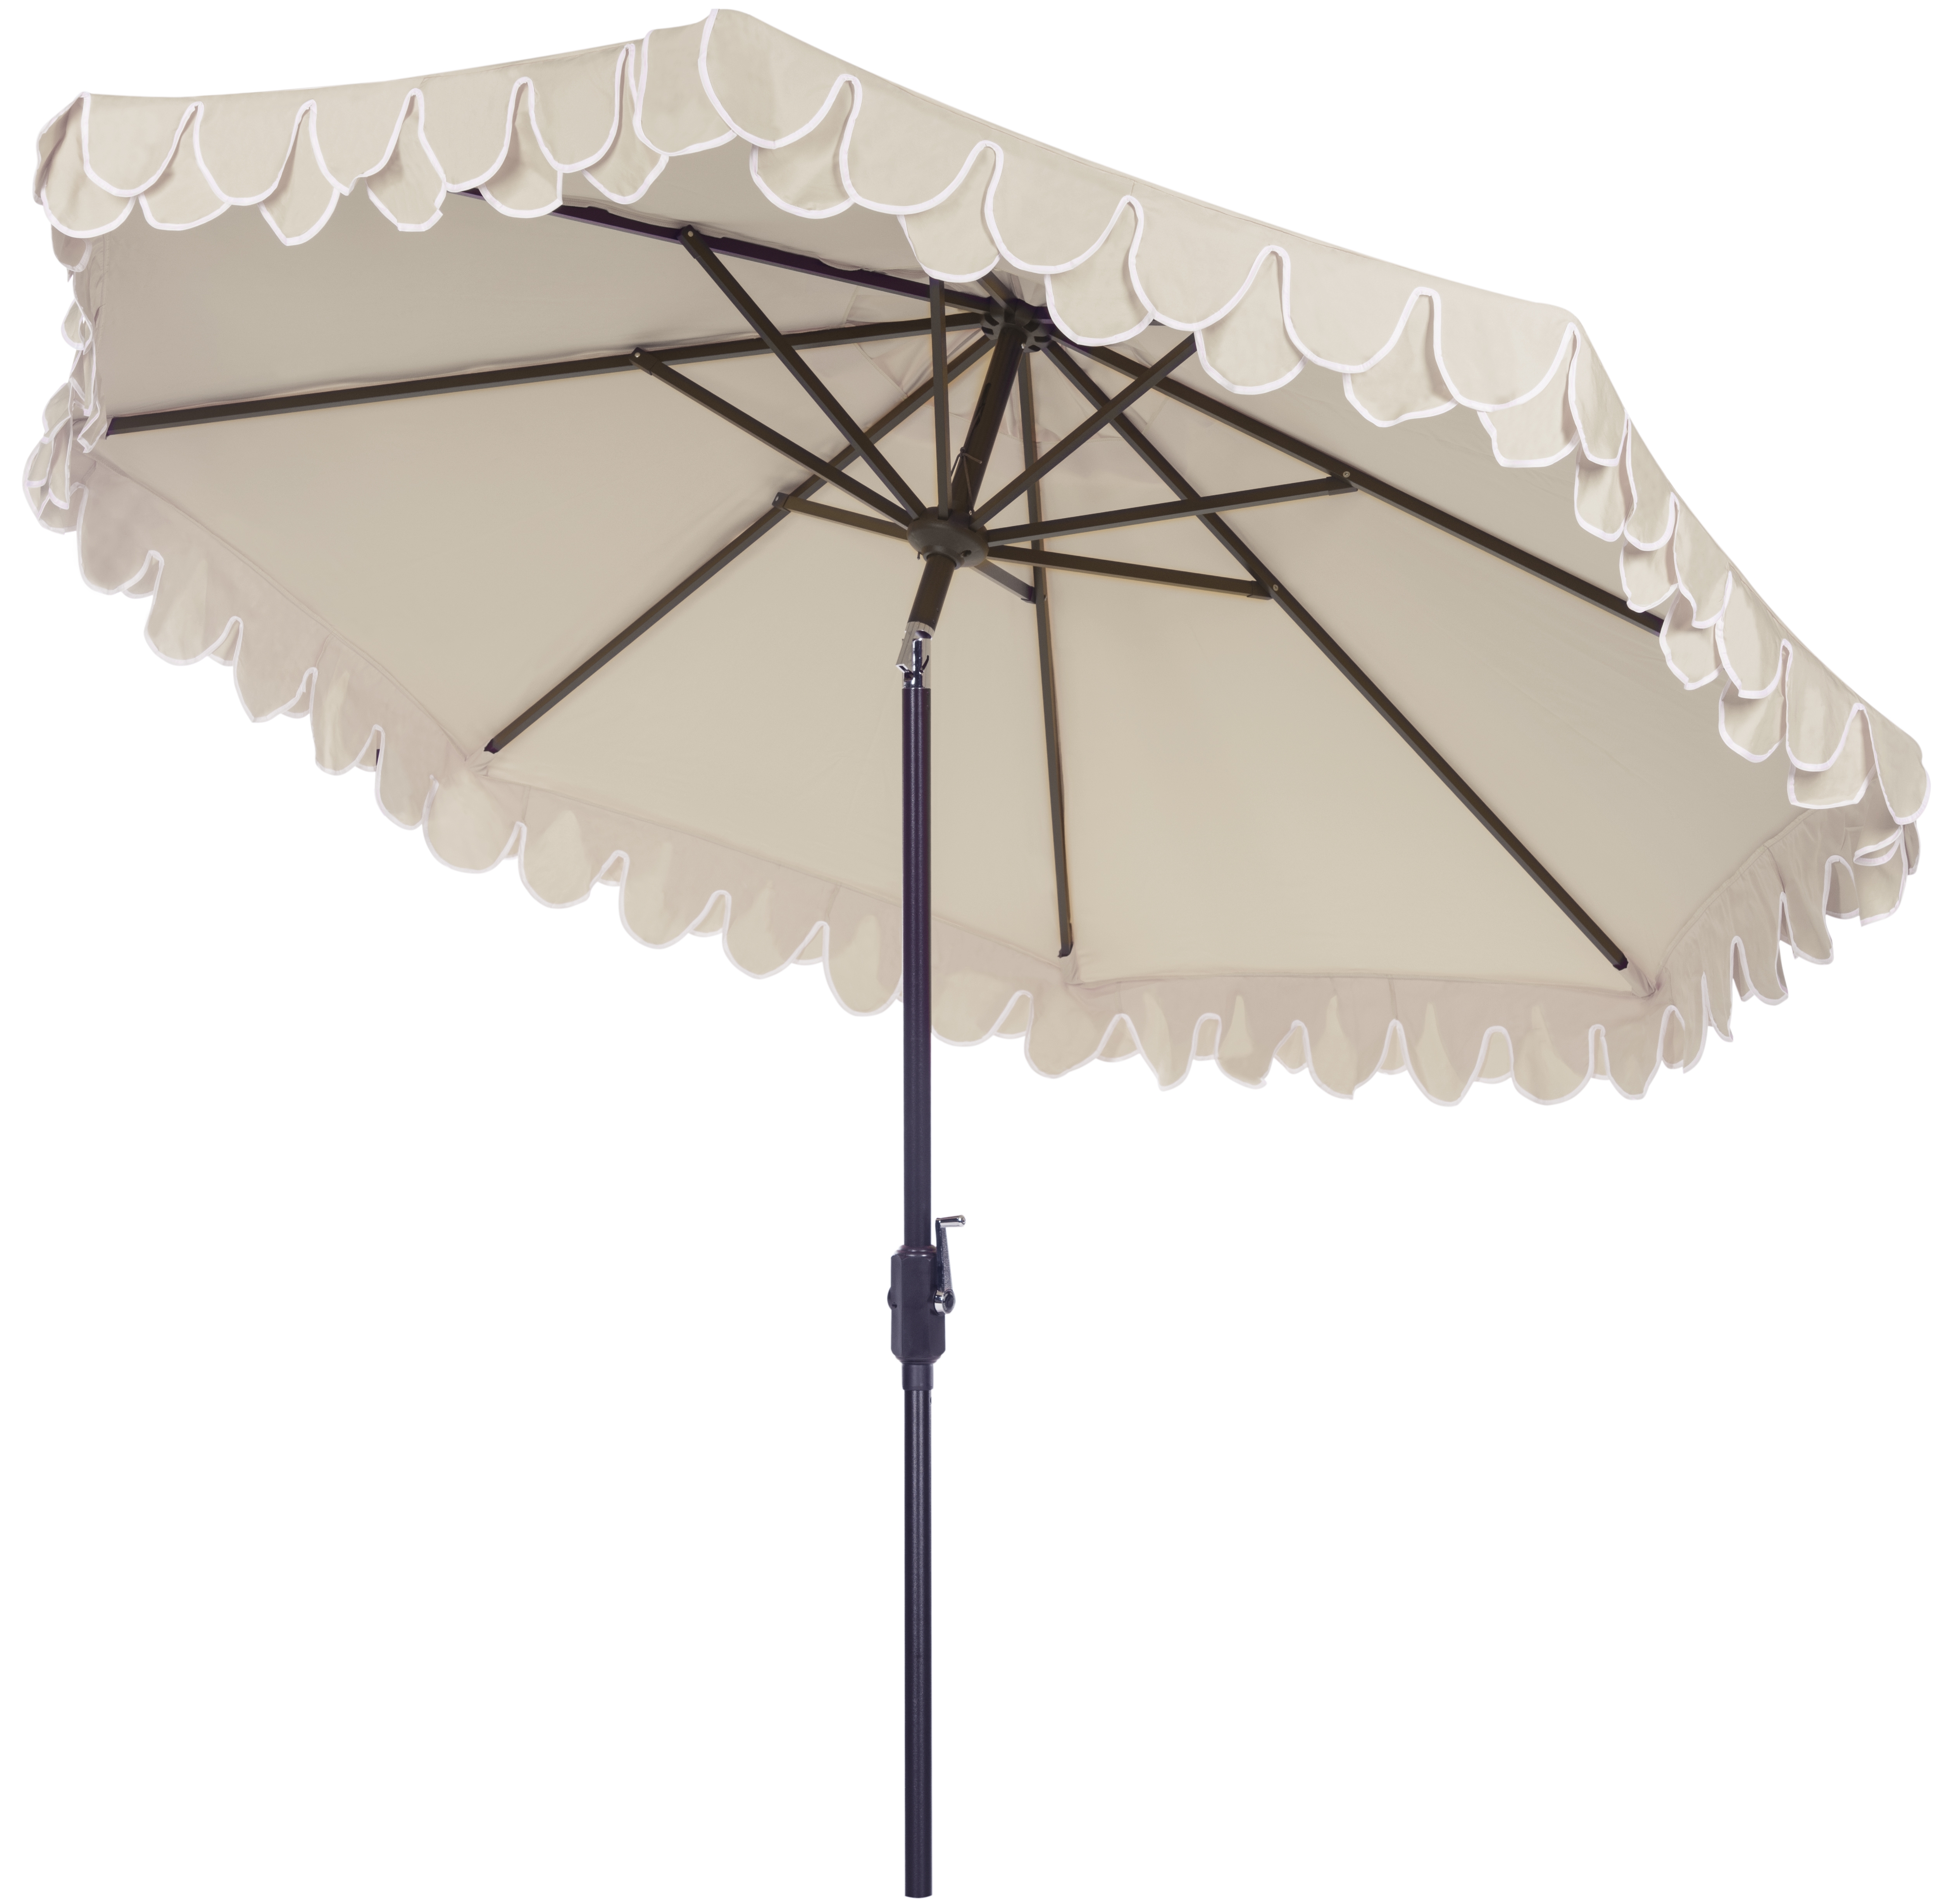 Uv Resistant Elegant Valance 9Ft Auto Tilt Umbrella - Beige/White - Arlo Home - Image 1